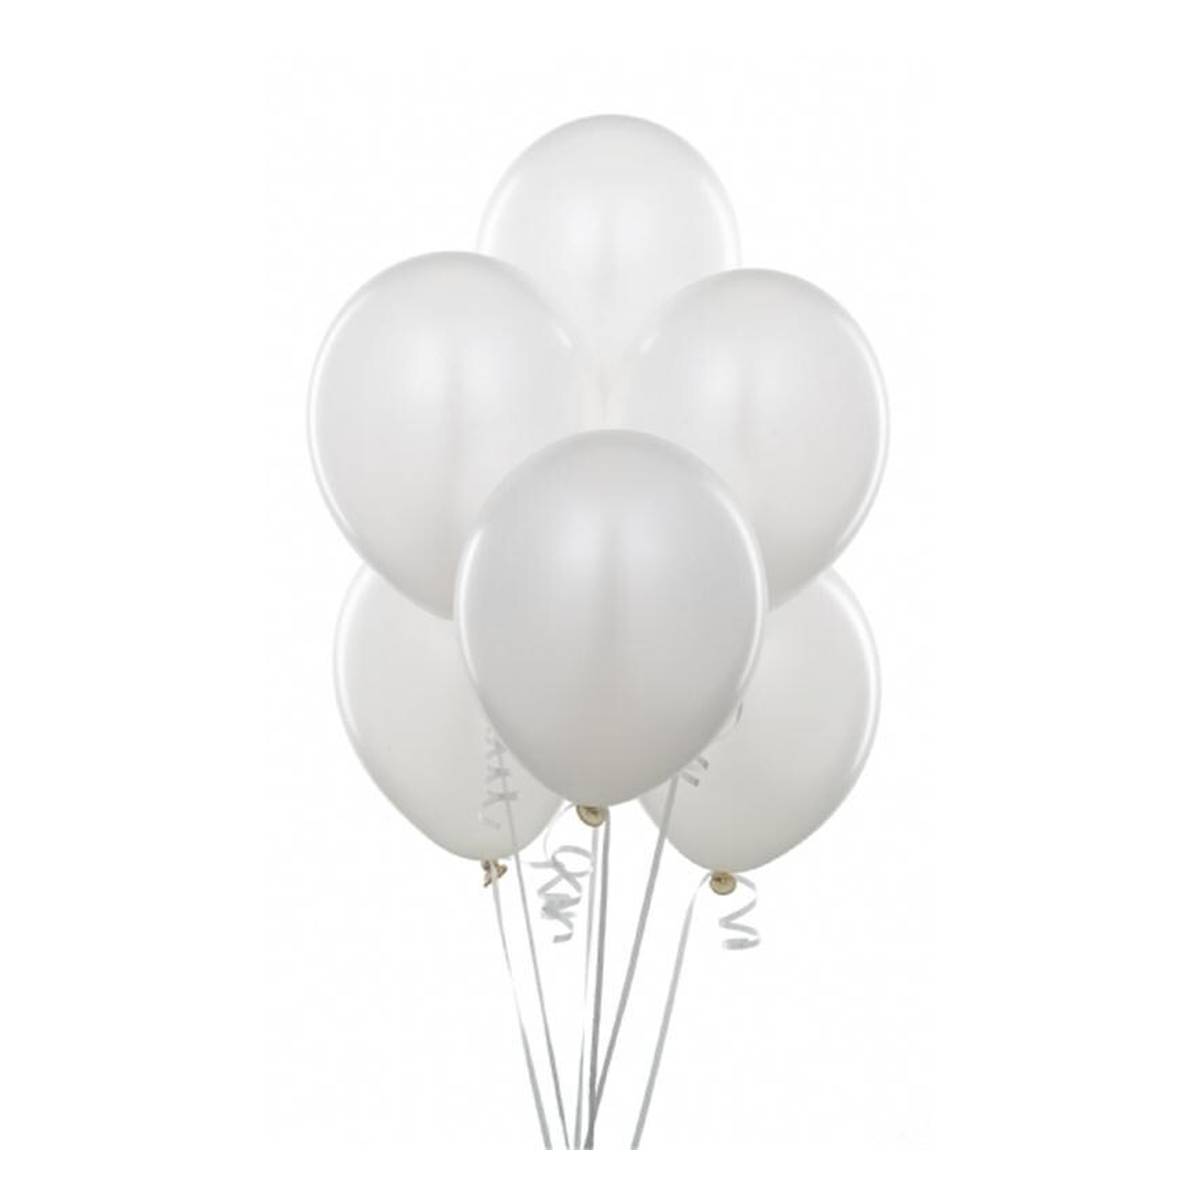 25 x 10 inch Latex White Wedding Balloons 